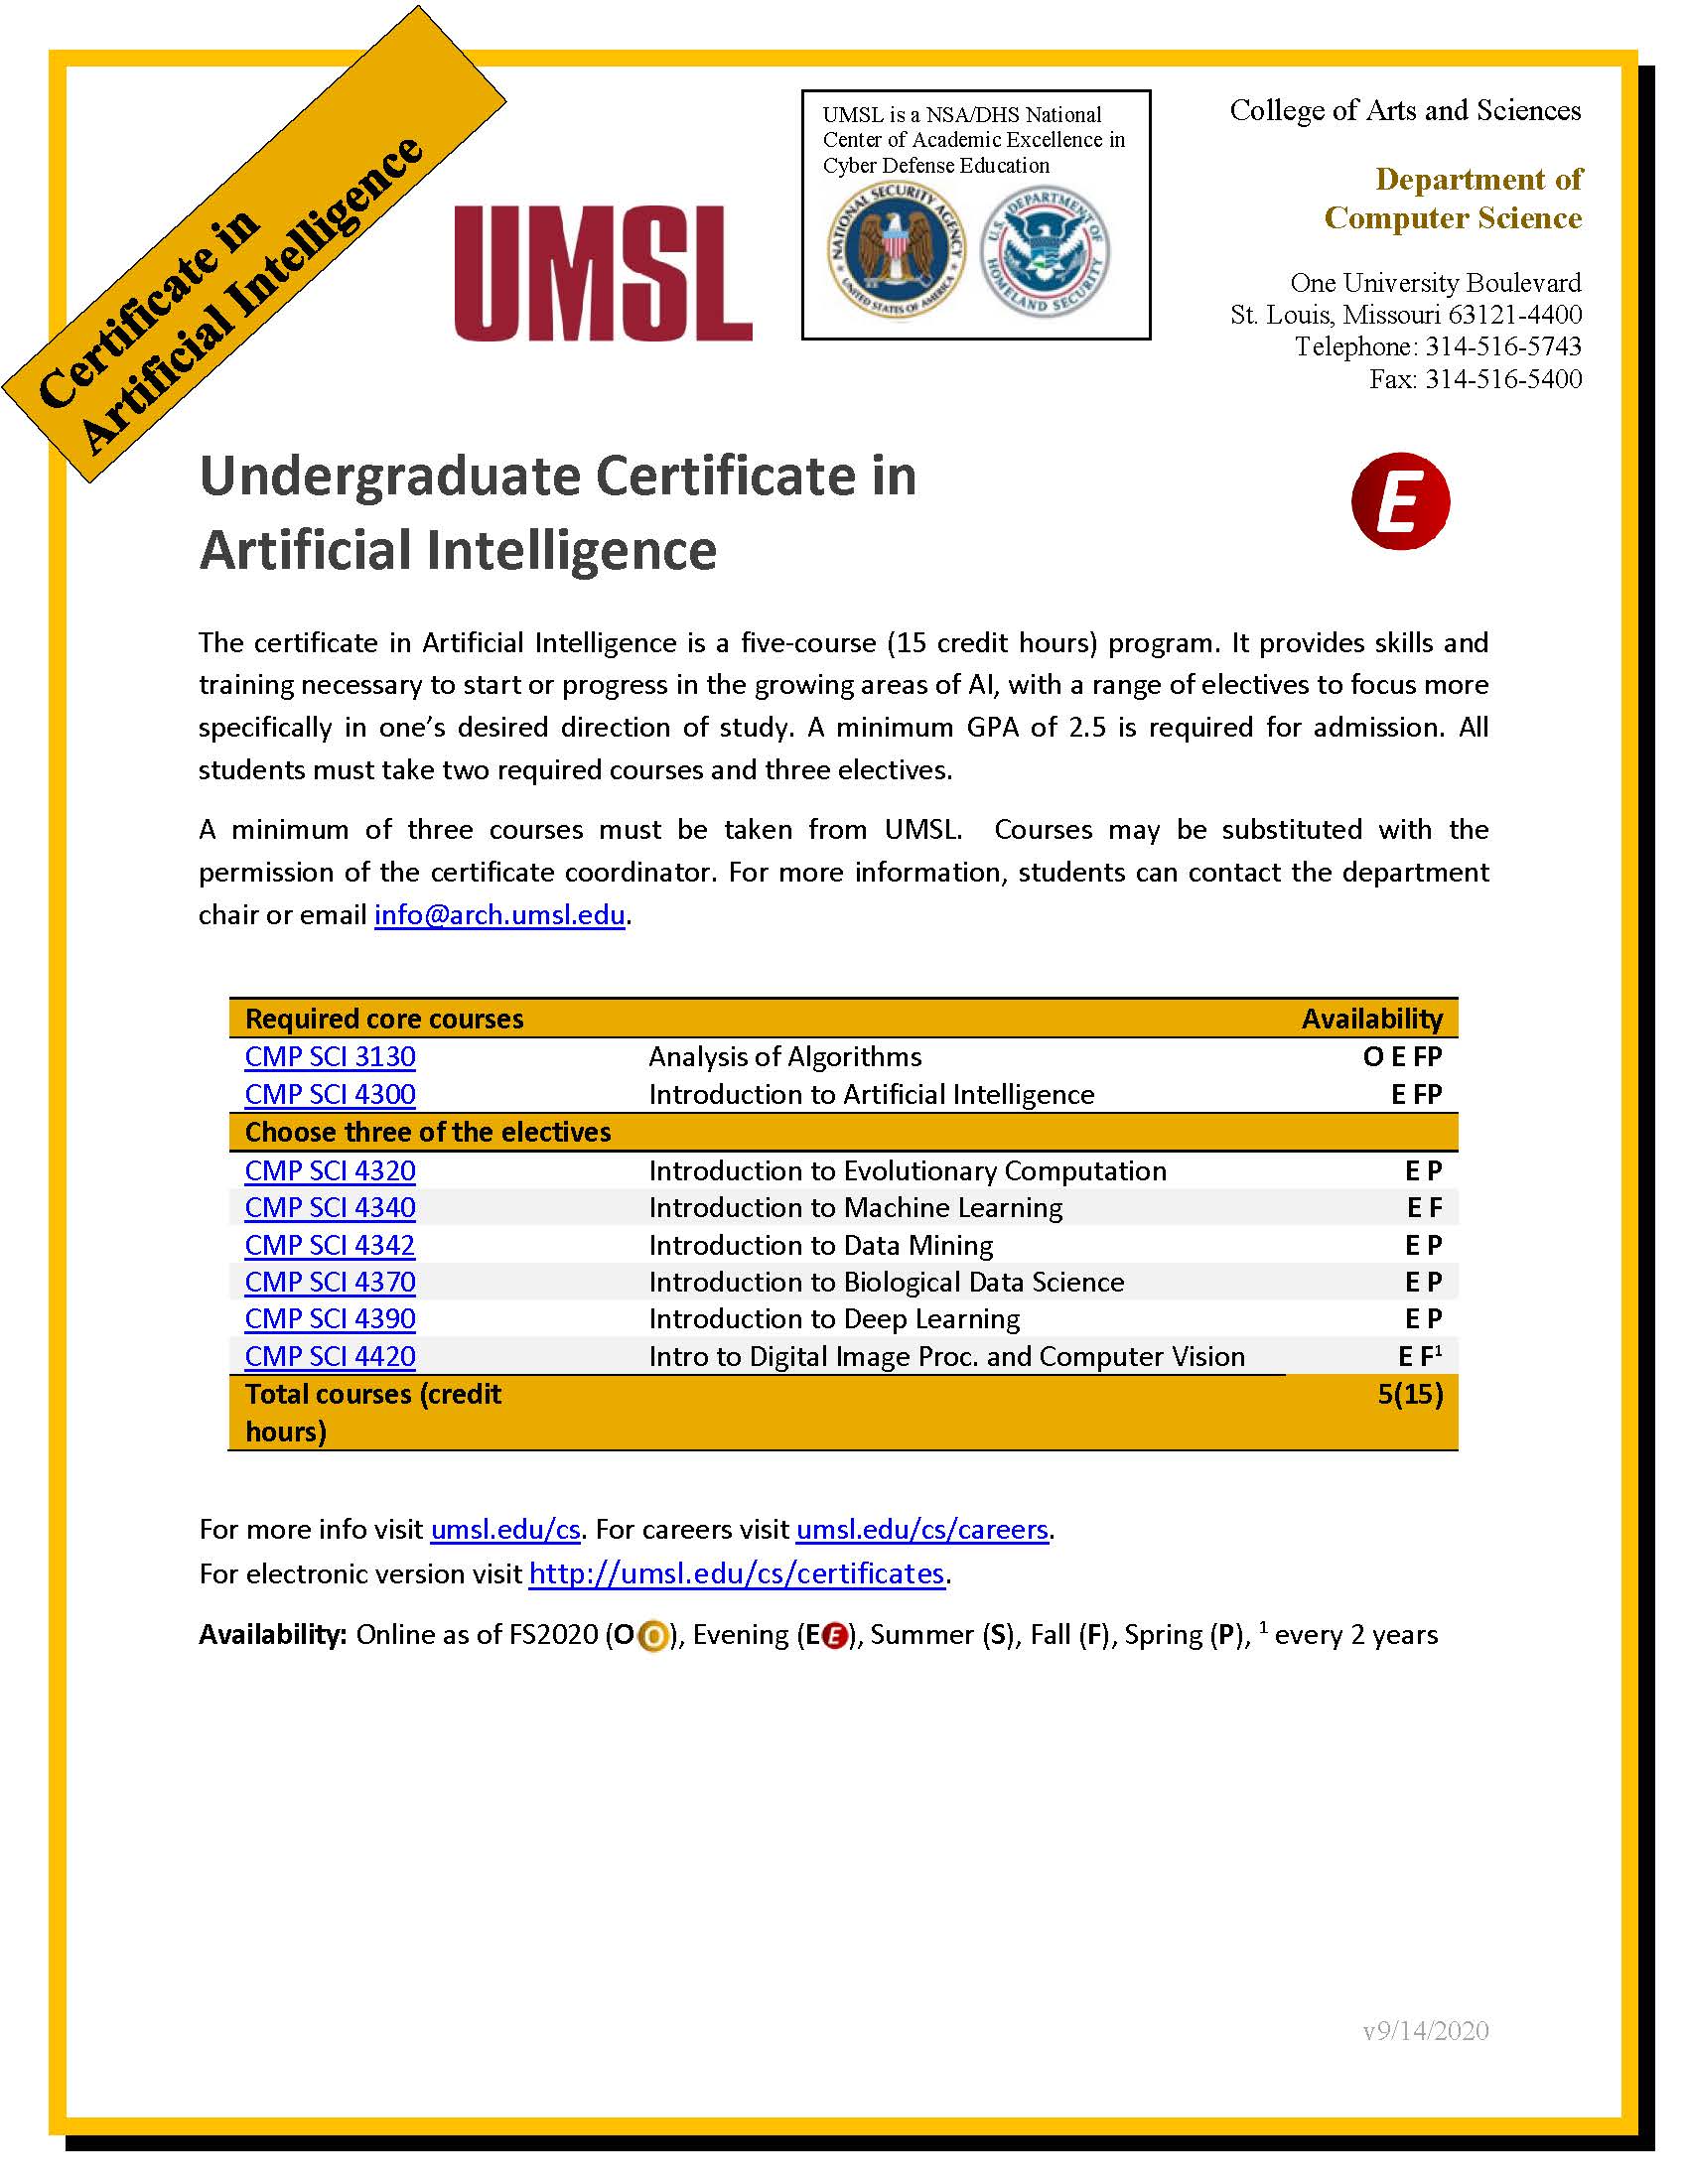 CertificateUndergraduate_ArtificialIntelligence_Flyer.jpg